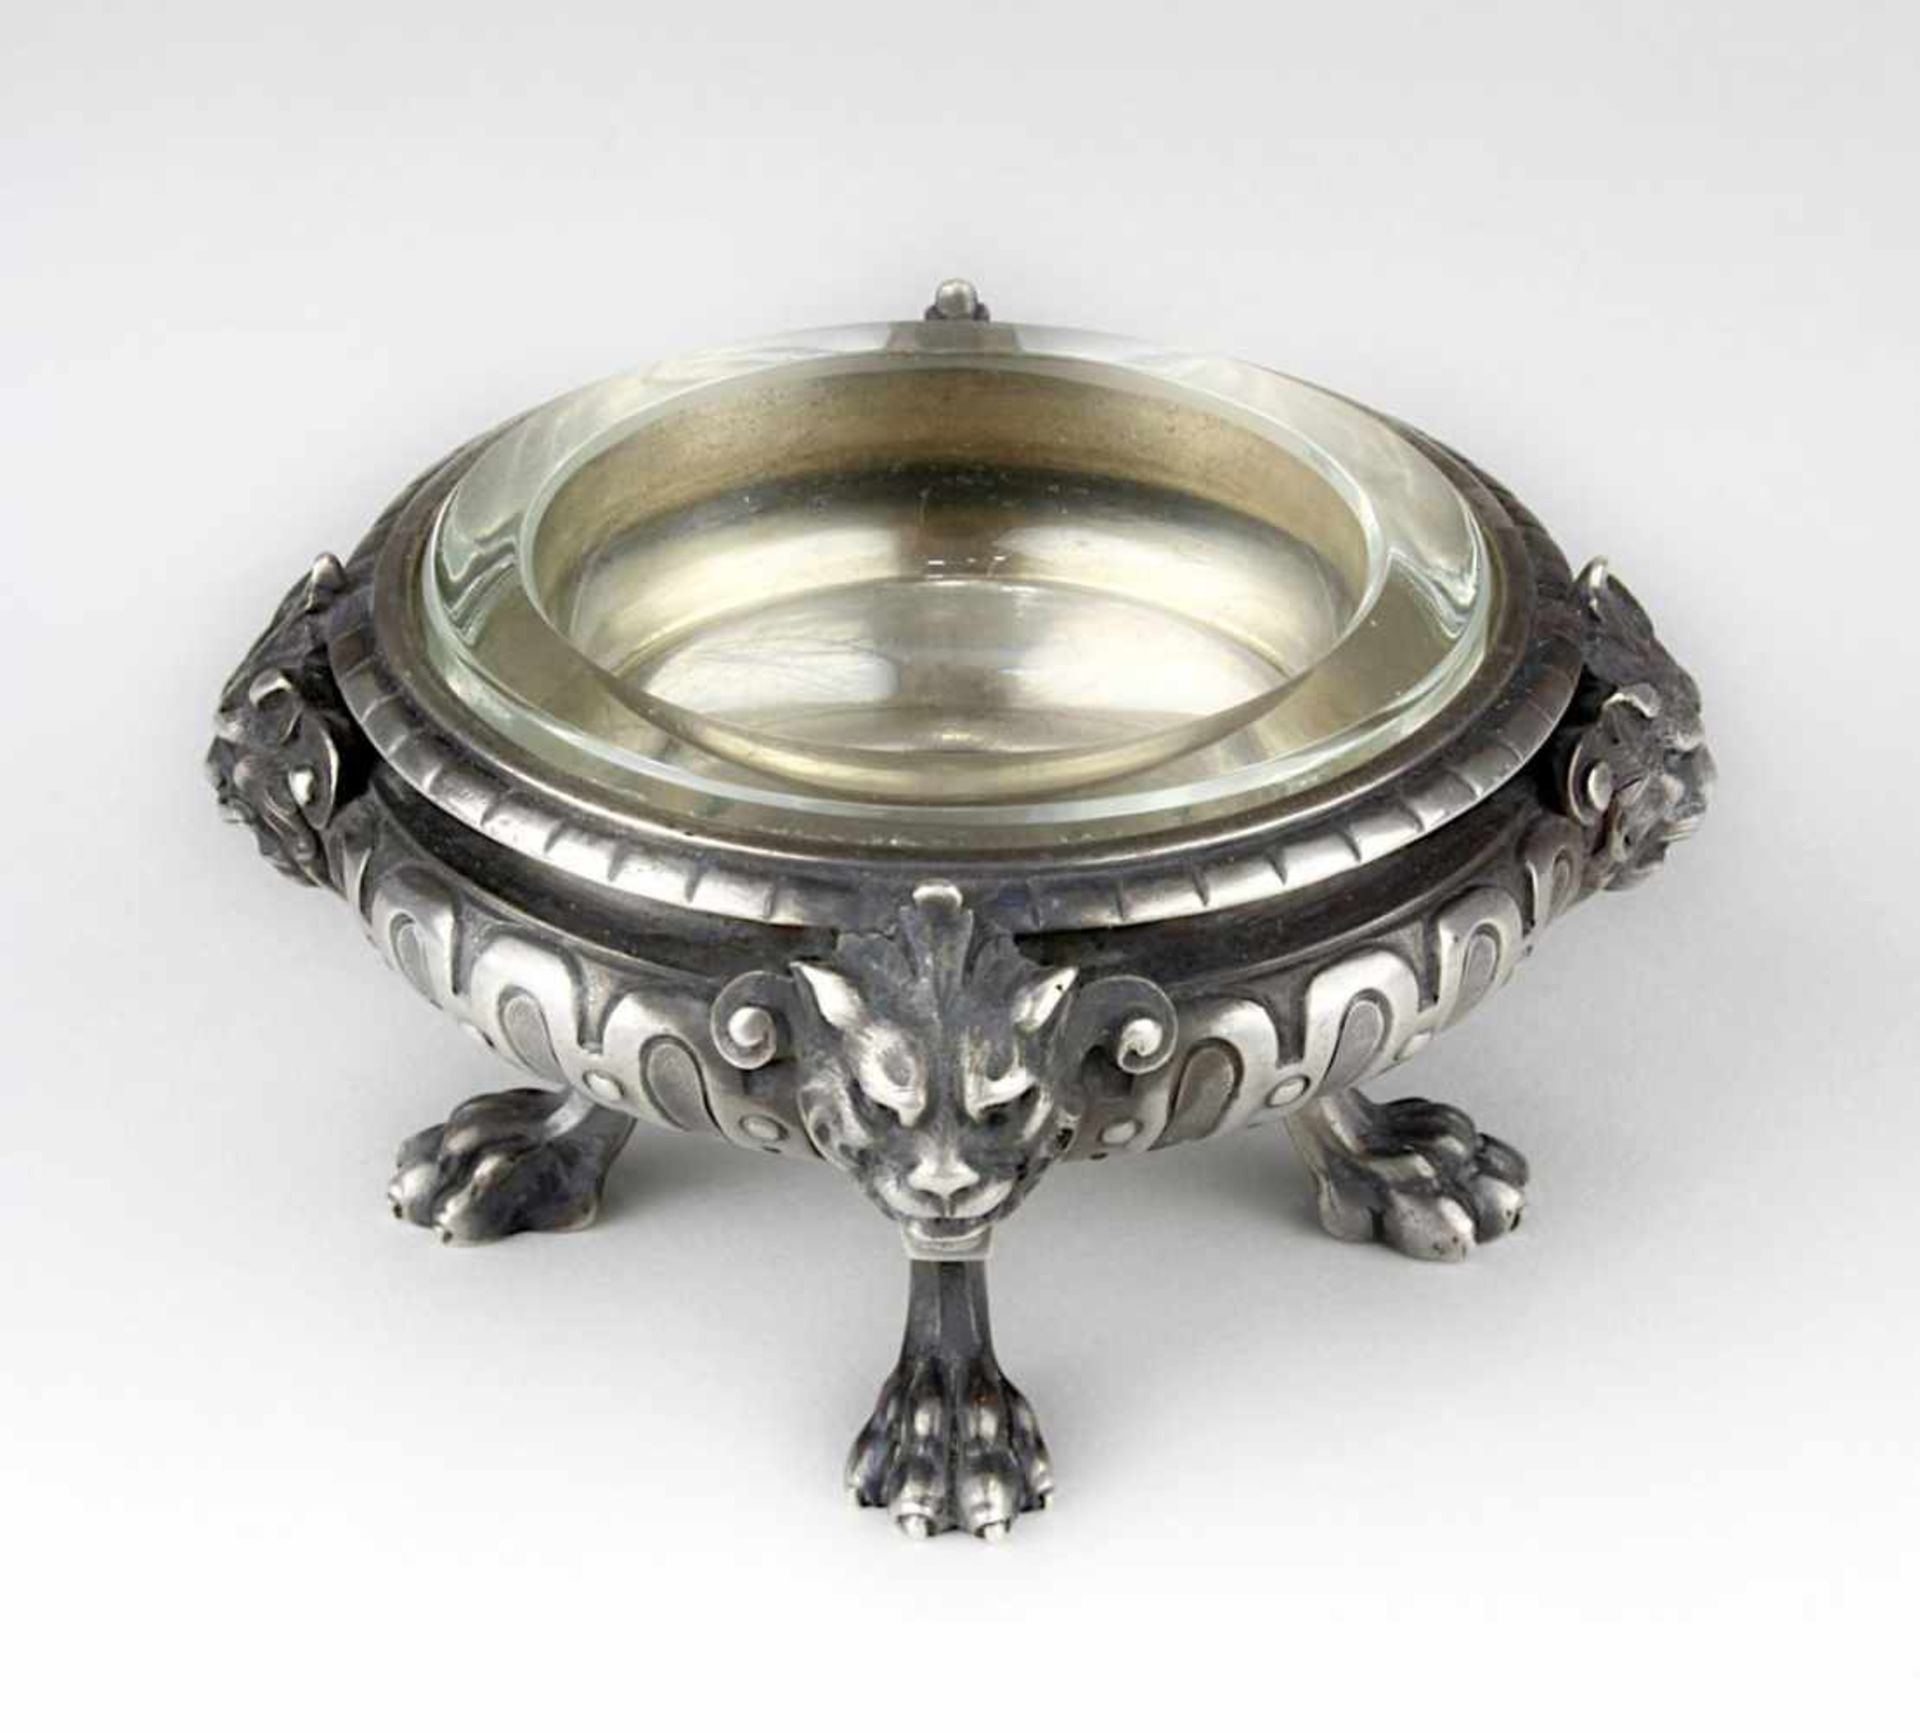 Silber-Saliere, Froment-Meurice, Paris um 1870, wohl 950er Silber, nicht gepunzt, geprüft, rundes